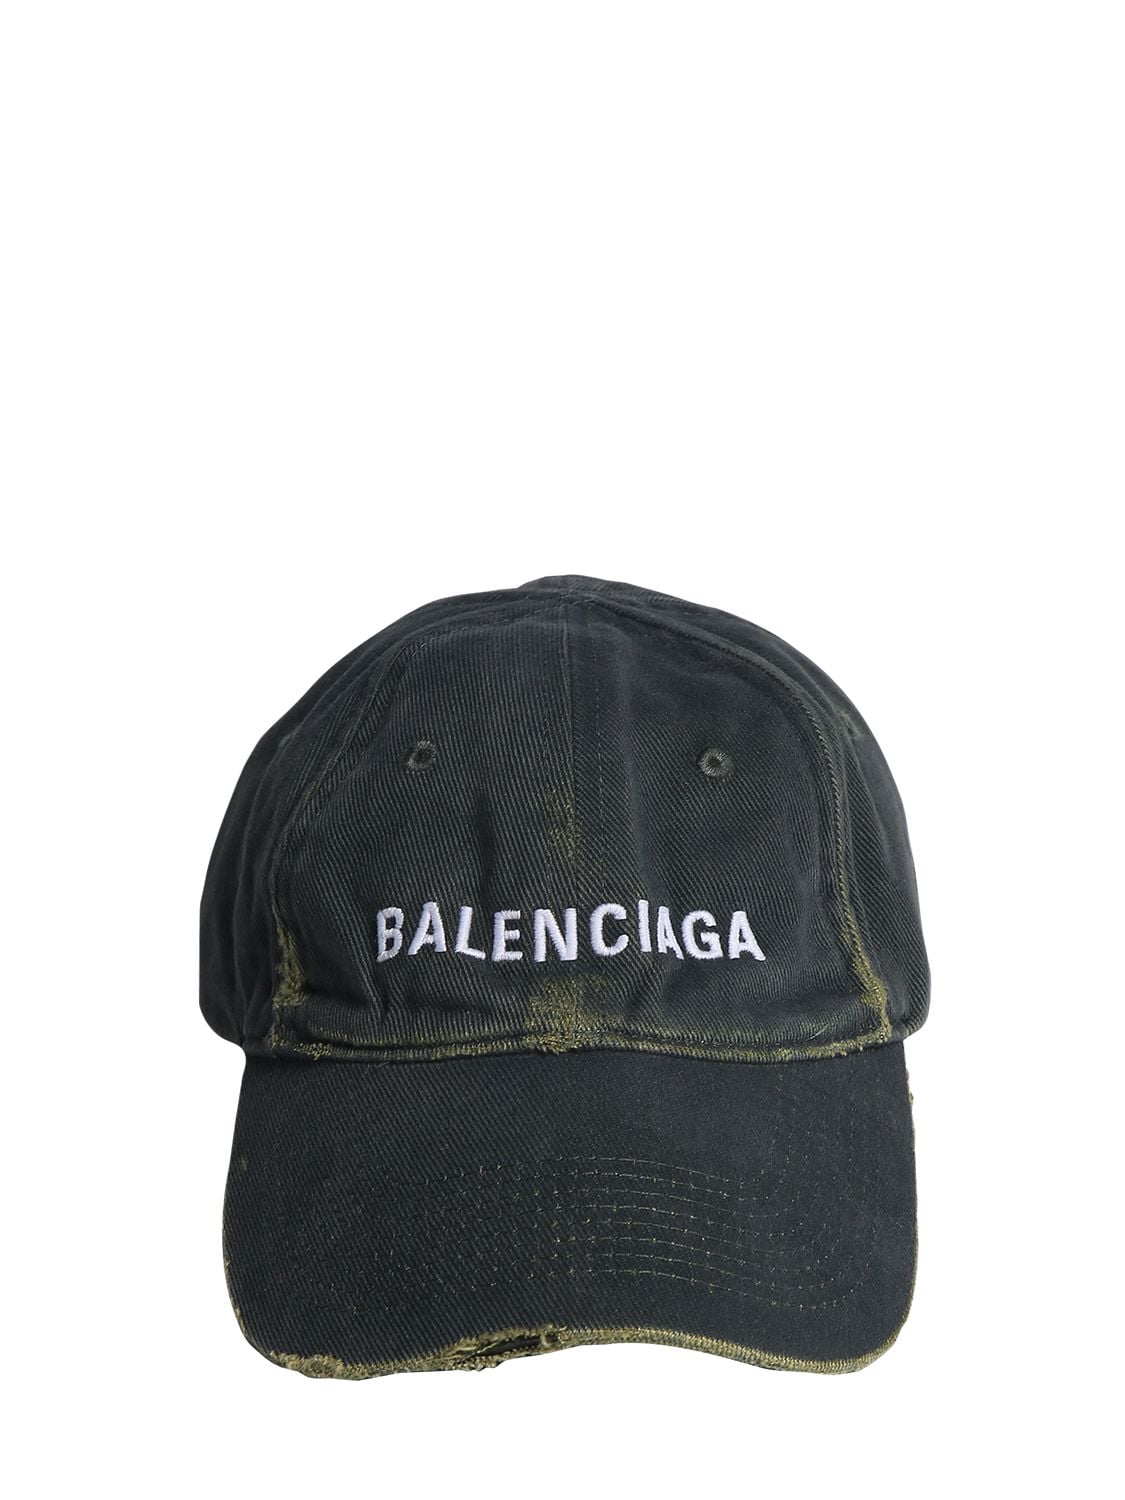 BALENCIAGA VINTAGE COTTON DENIM BASEBALL CAP,73IWD2040-MZA3NW2